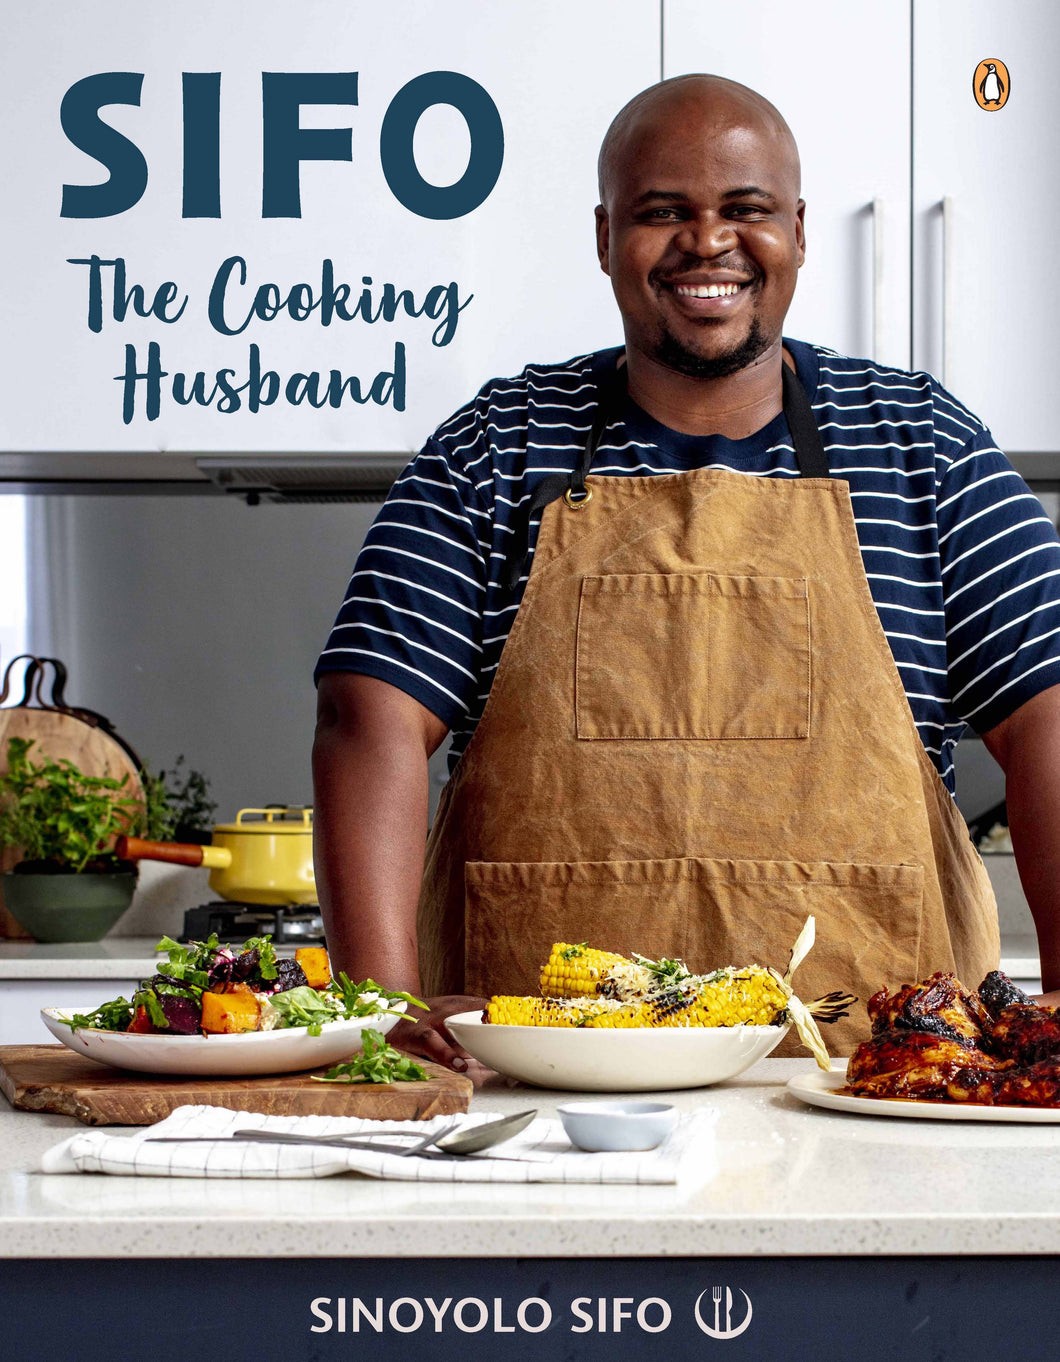 Sifo: The Cooking Husband - Sinoyolo Sifo